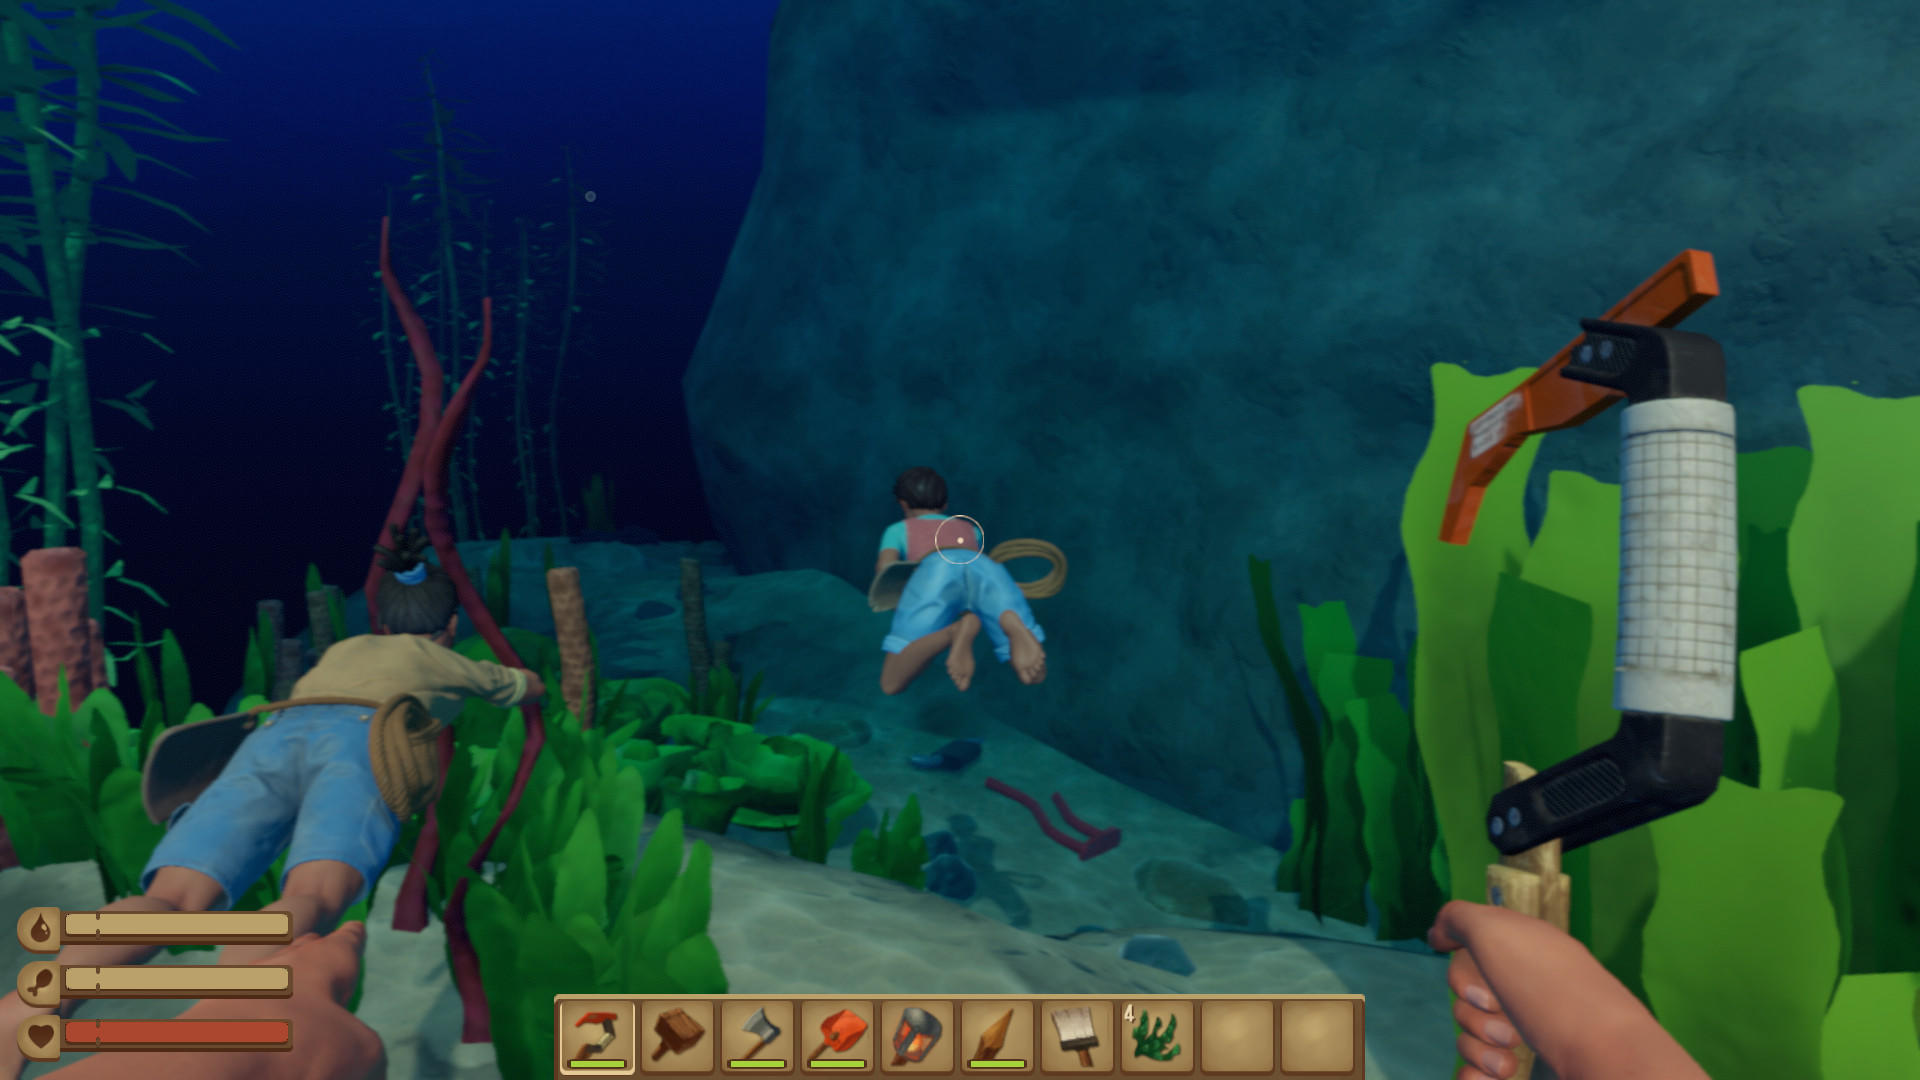 Raft Survival Multiplayer -como viajar pra ilha 